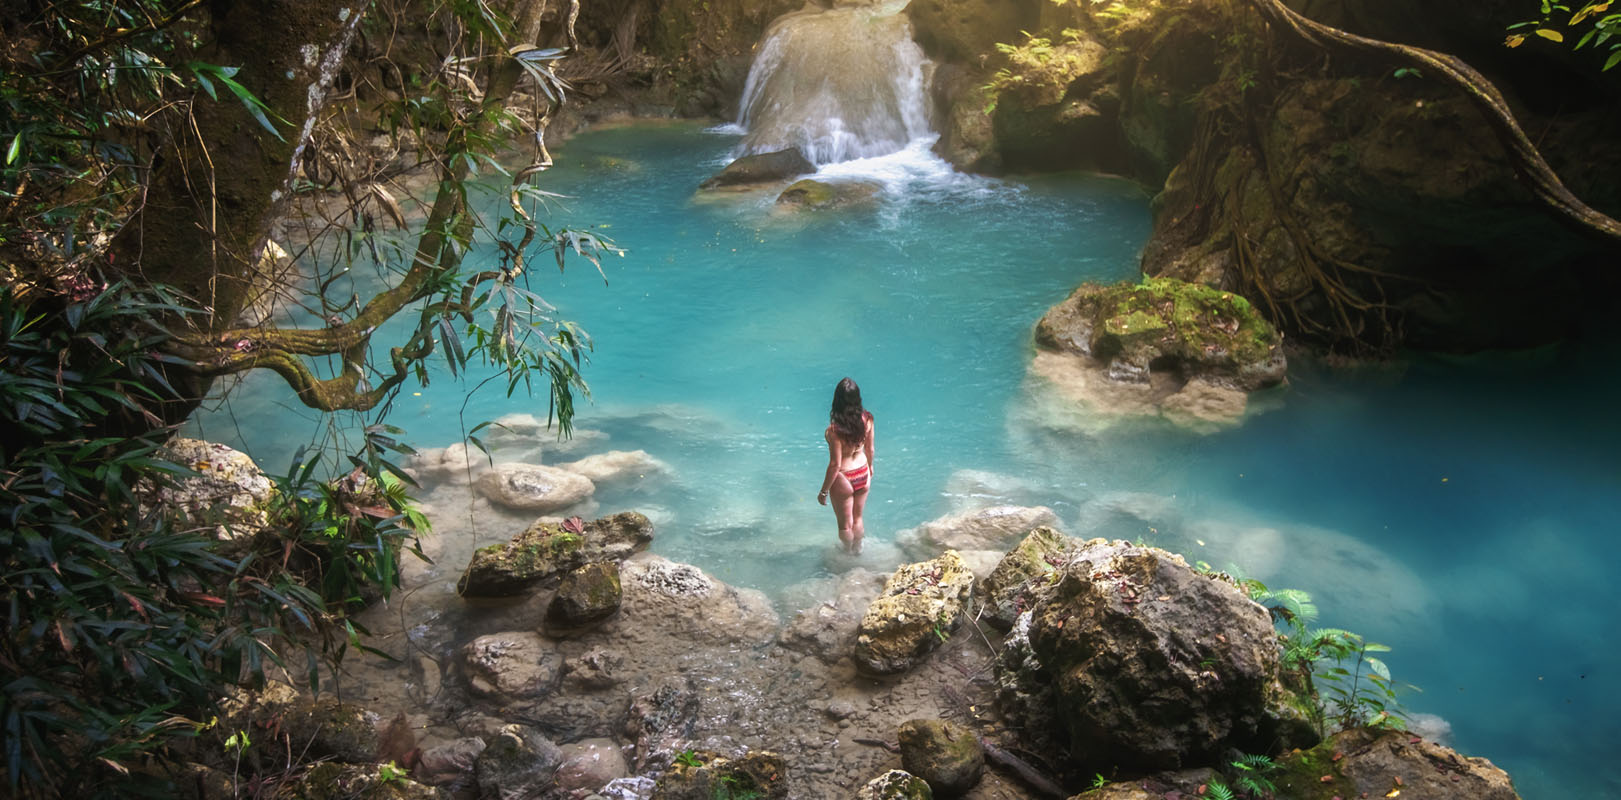 Best places to visit in Cebu - Kawasan Falls